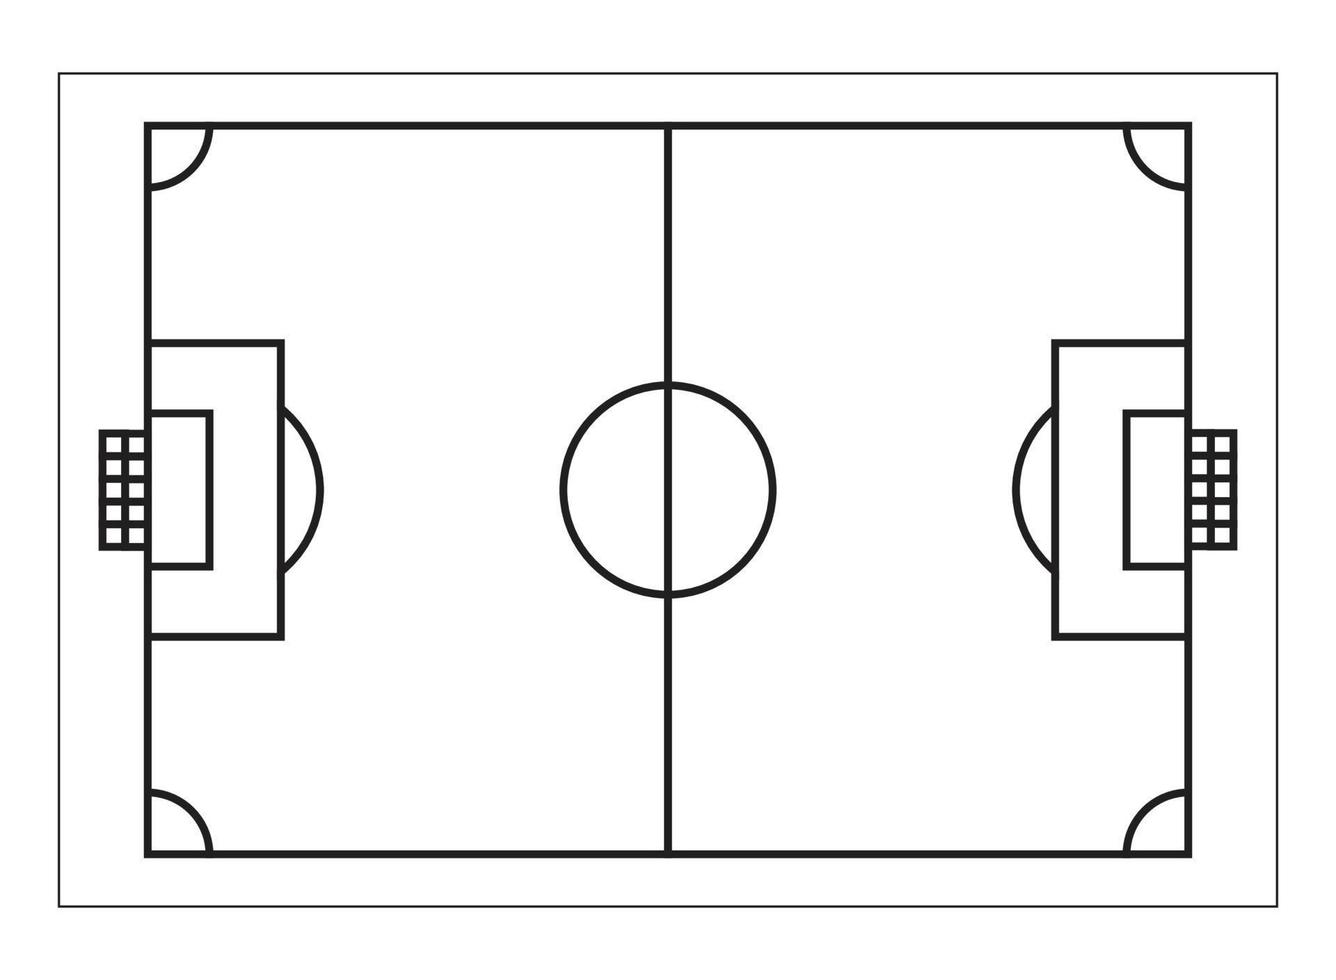 Basic football ground plan outline design. Vector illustration